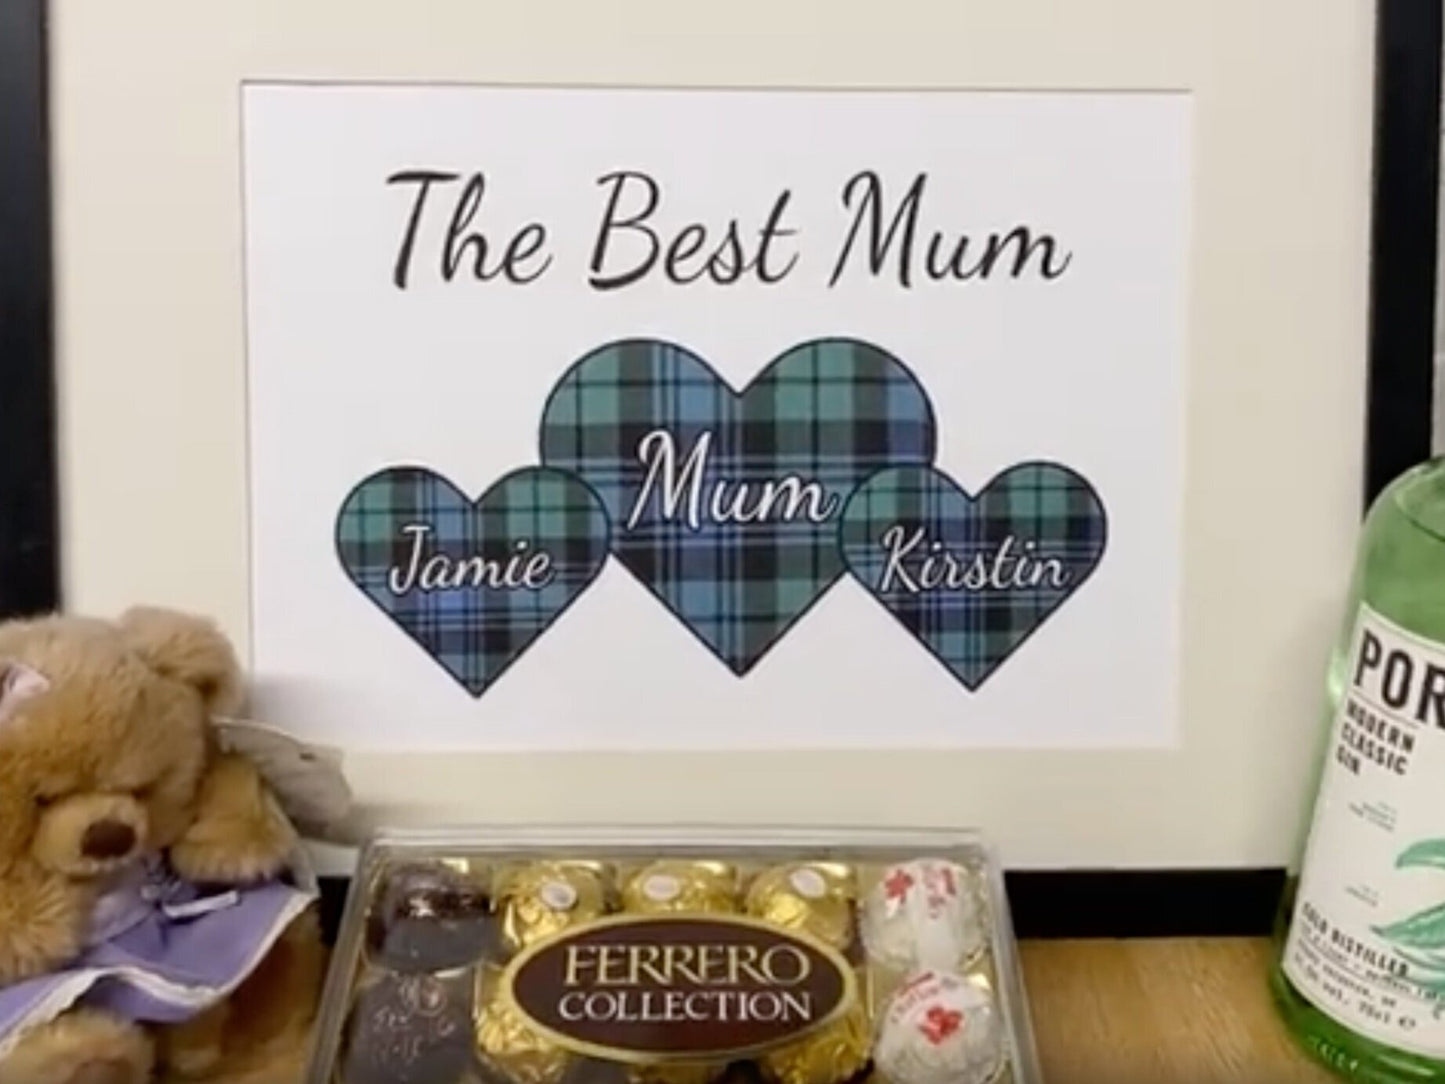 Scottish Personalised Family Tartan Hearts